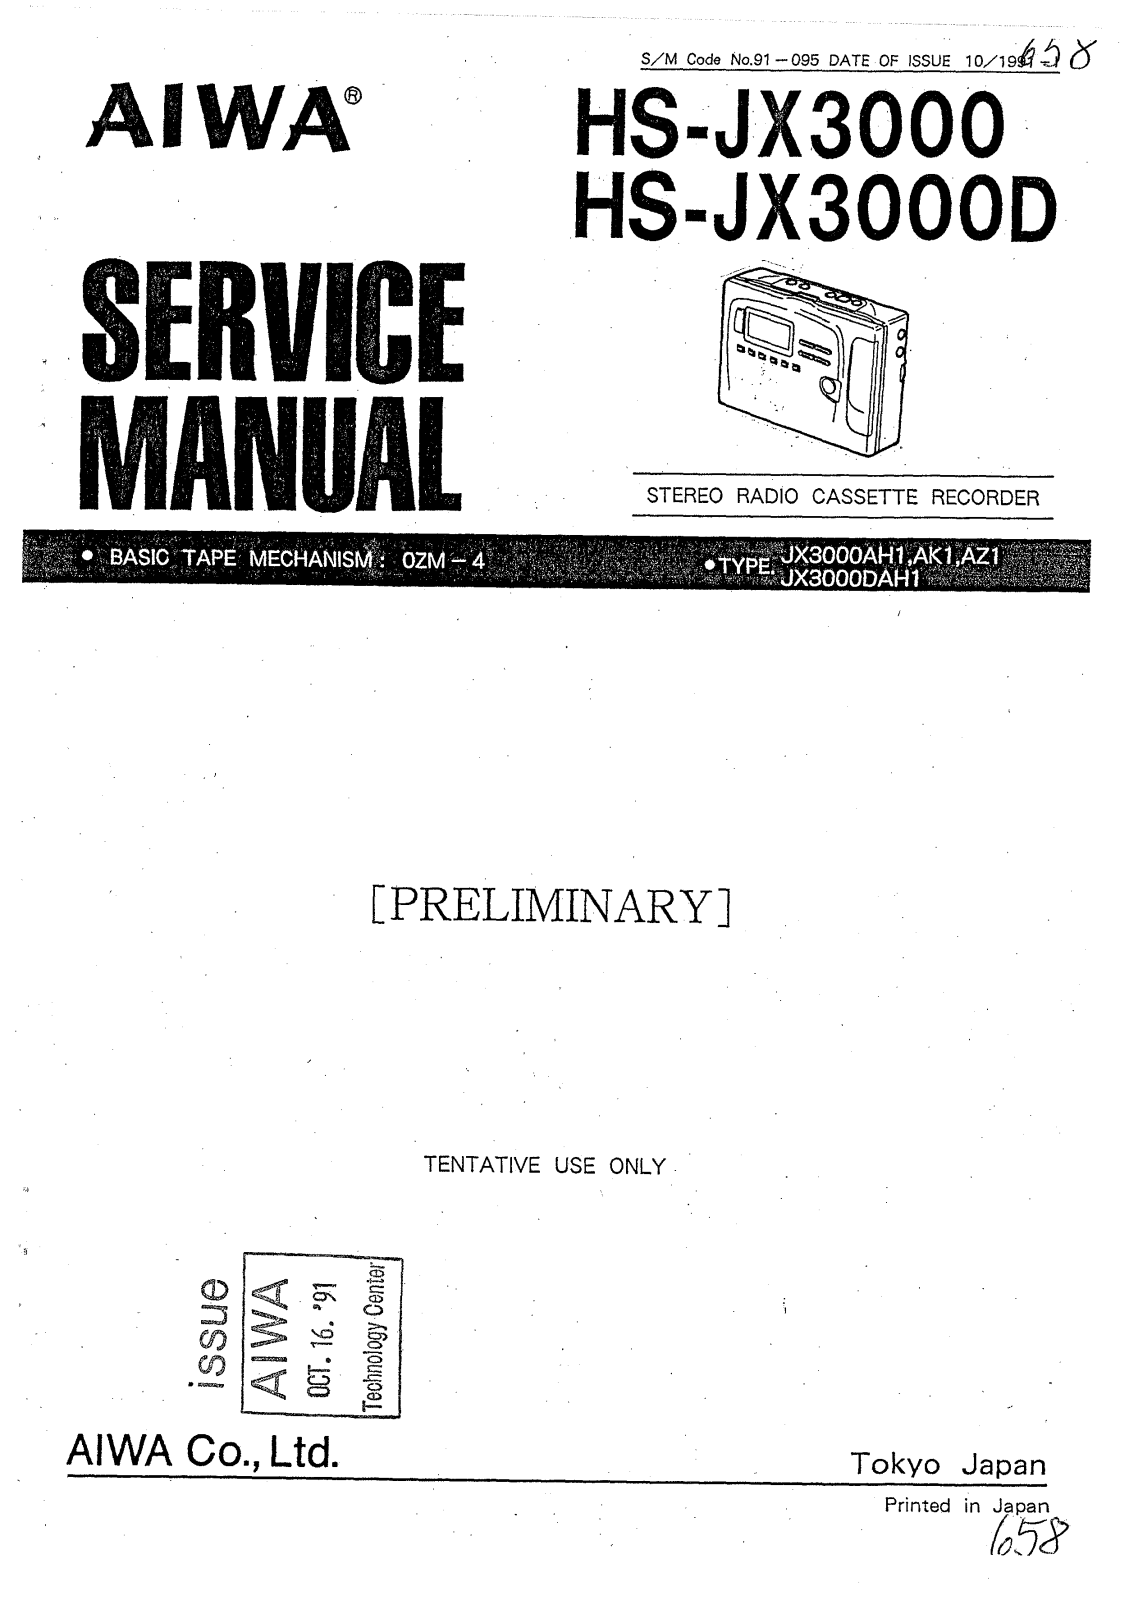 aiwa hs-jx3000d, hs-jx3000 Service Manual